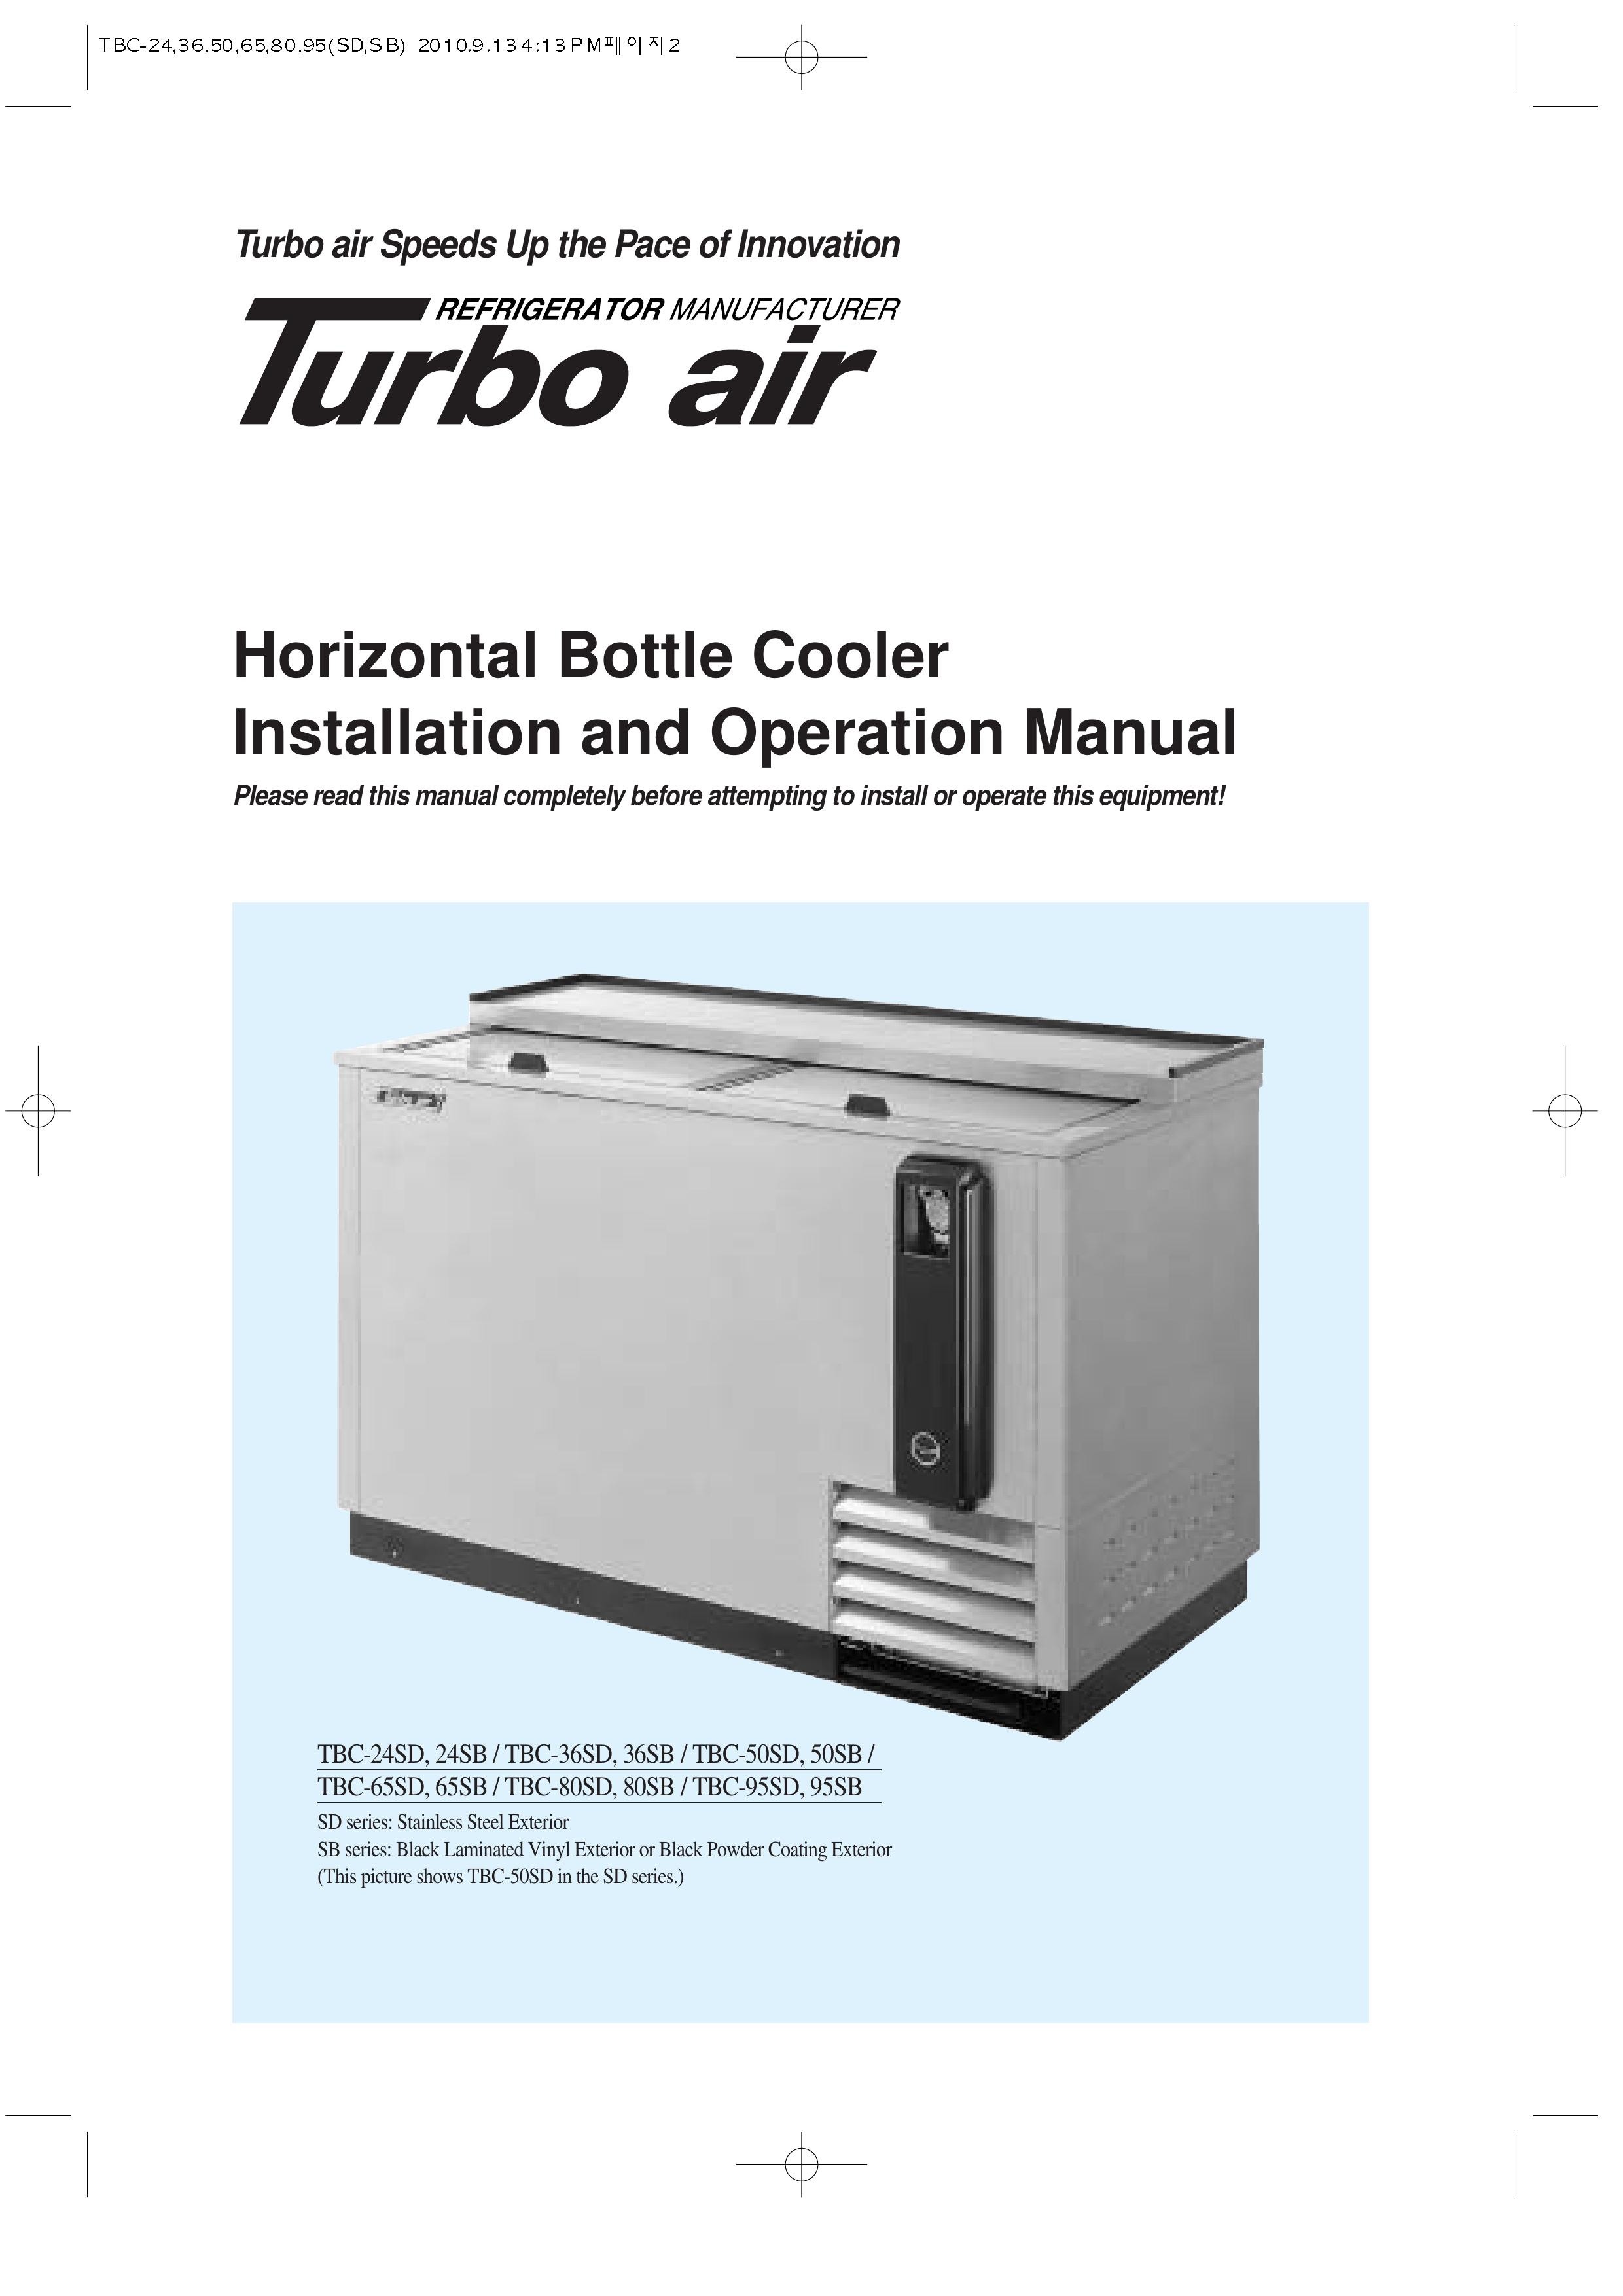 Turbo Air TBC-36SD, 36SB Refrigerator User Manual